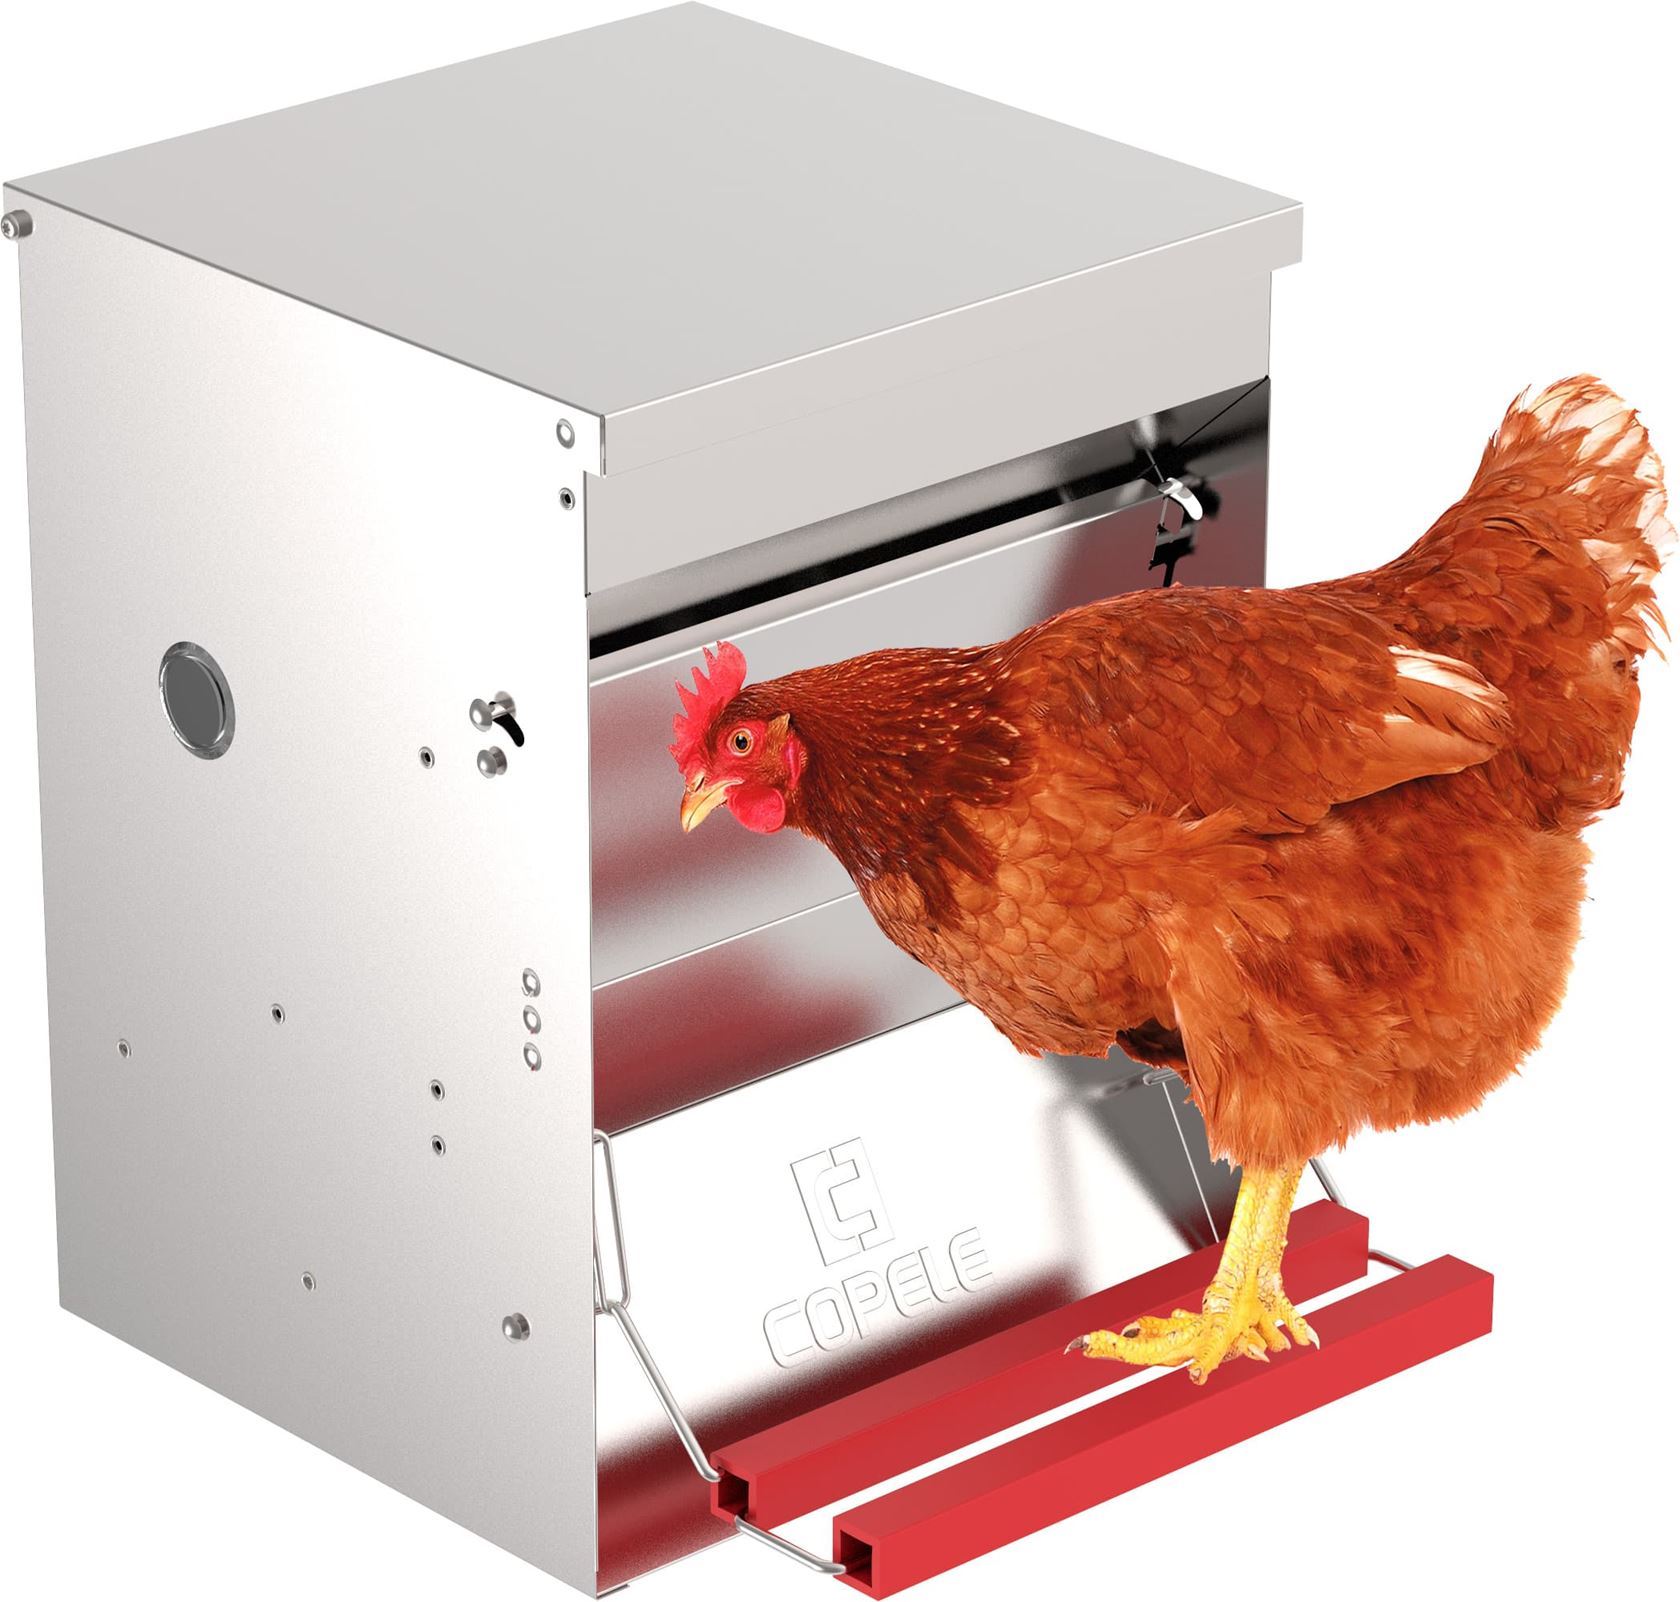 Automatische-trapbak-voederbak-voor-kippen-30kg-50x50x30cm